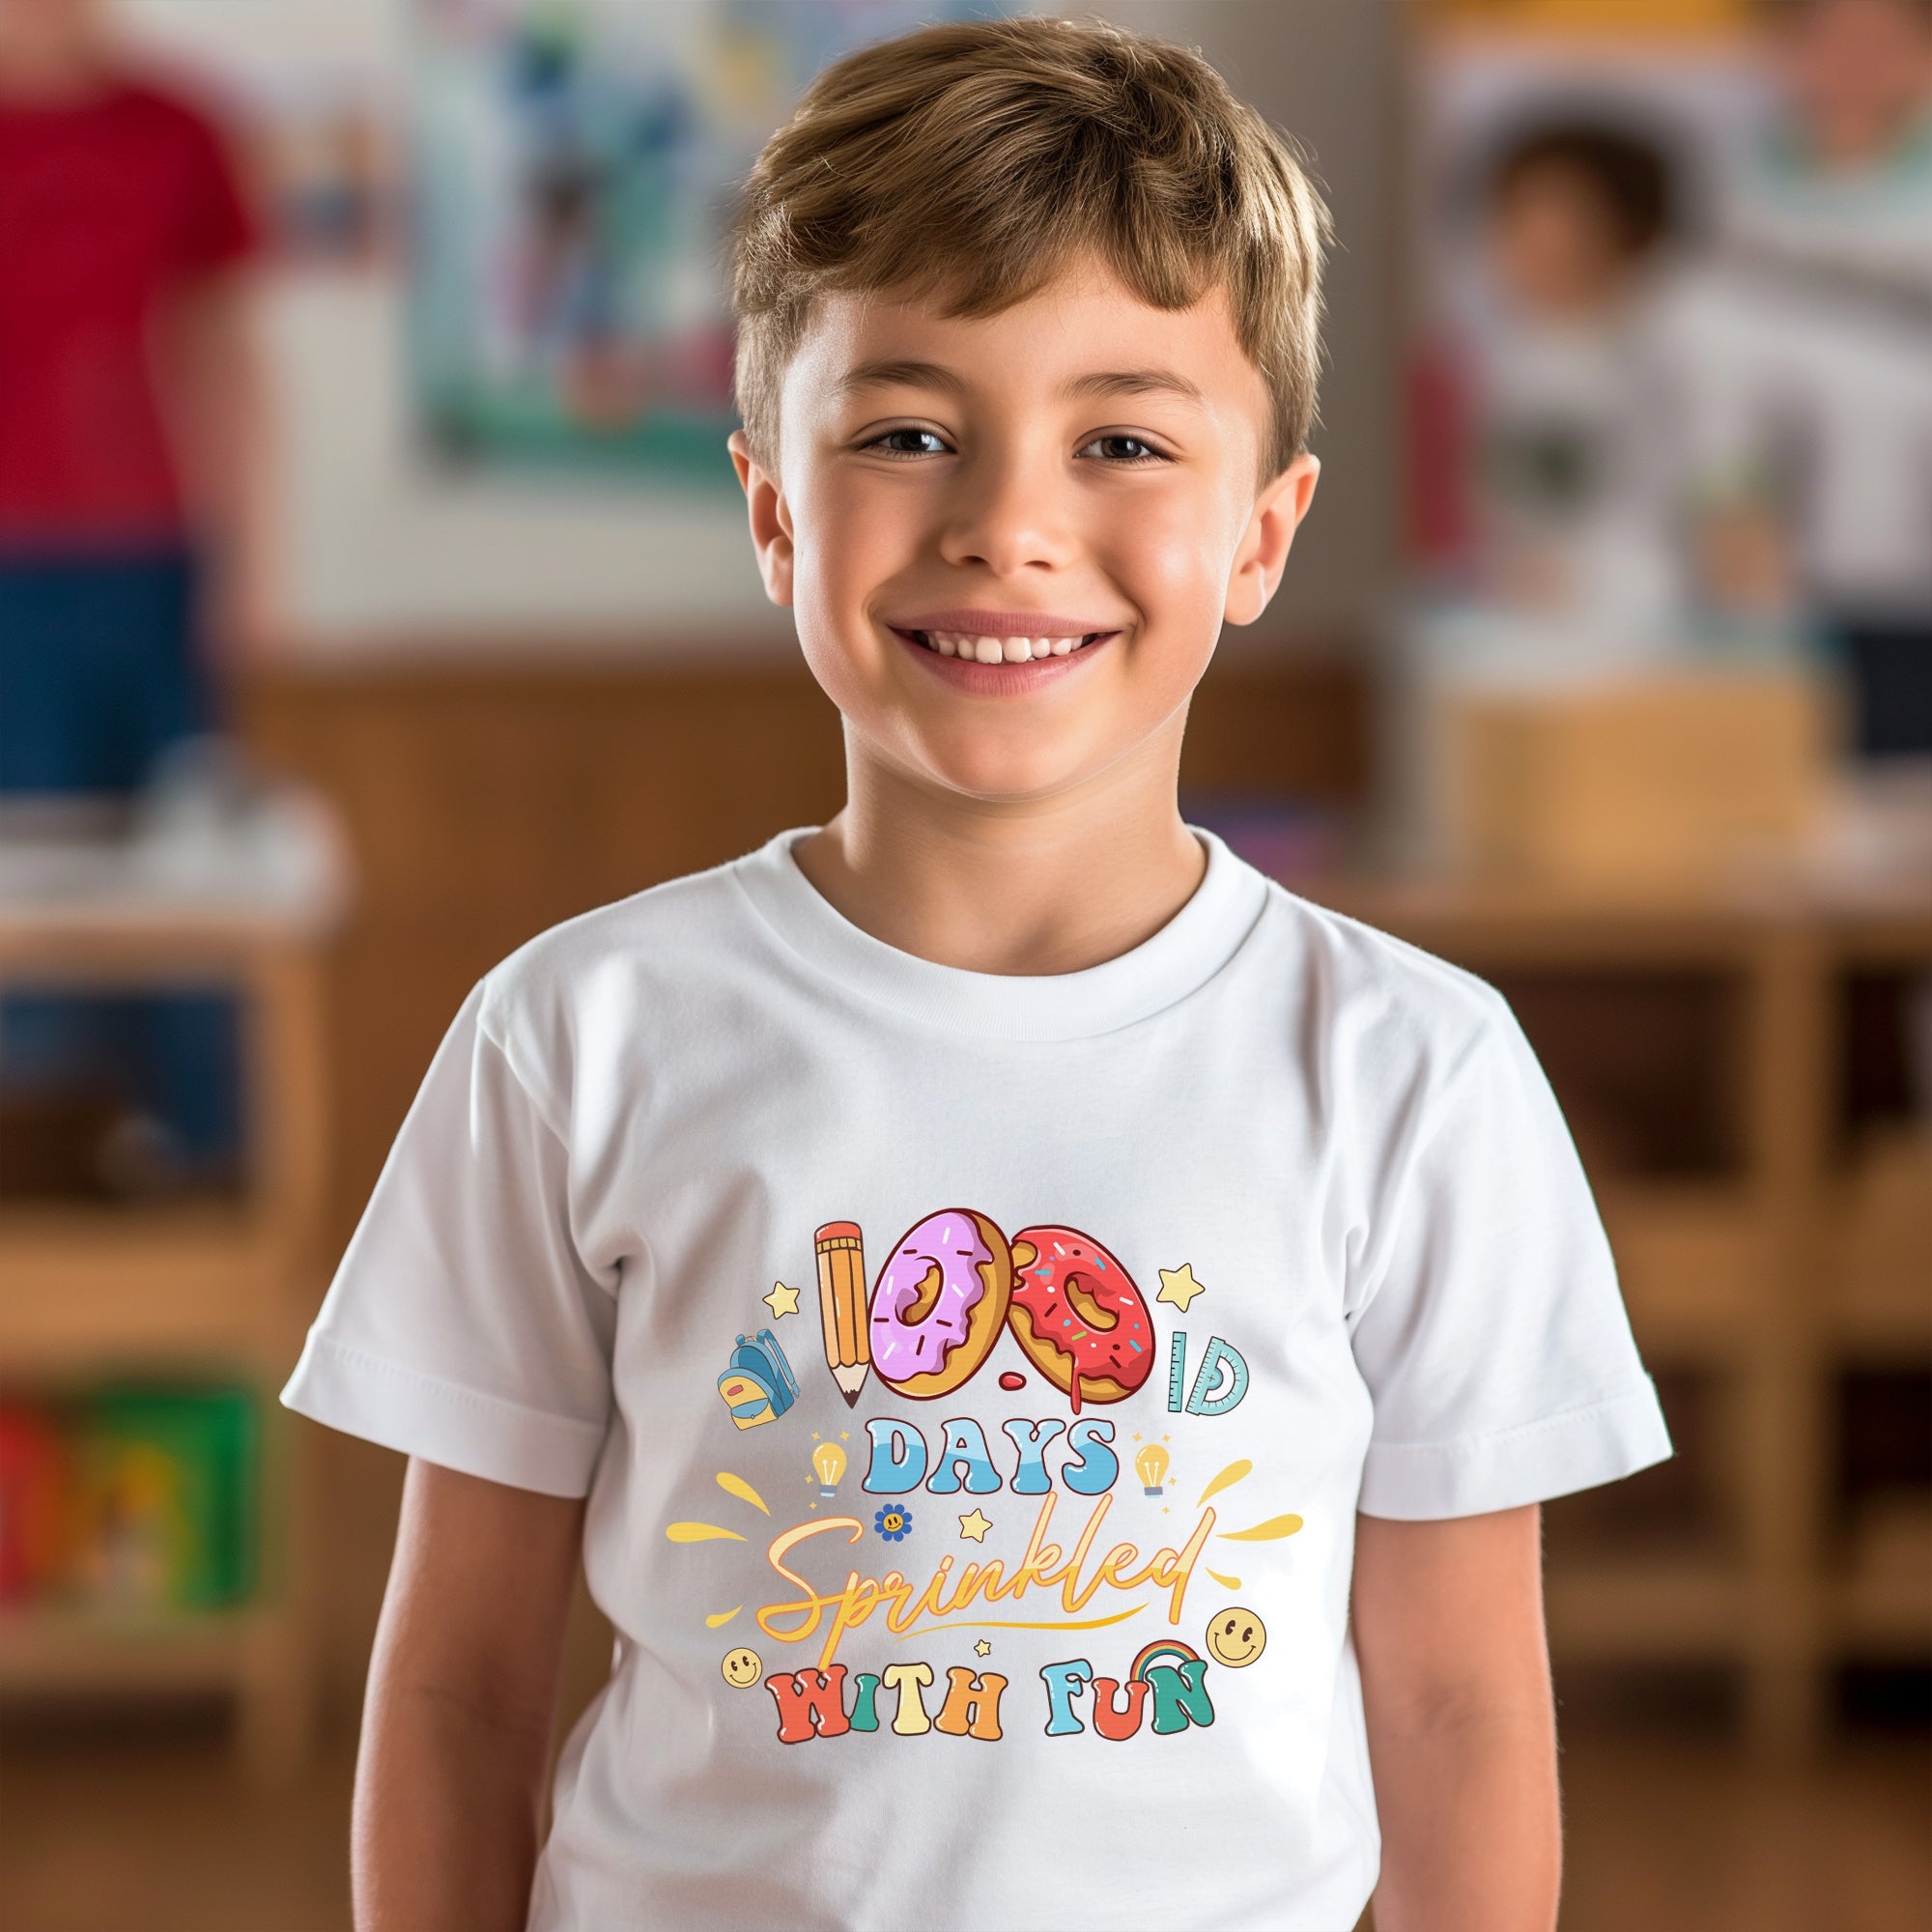 100 Days of School Kids T-Shirt 1181